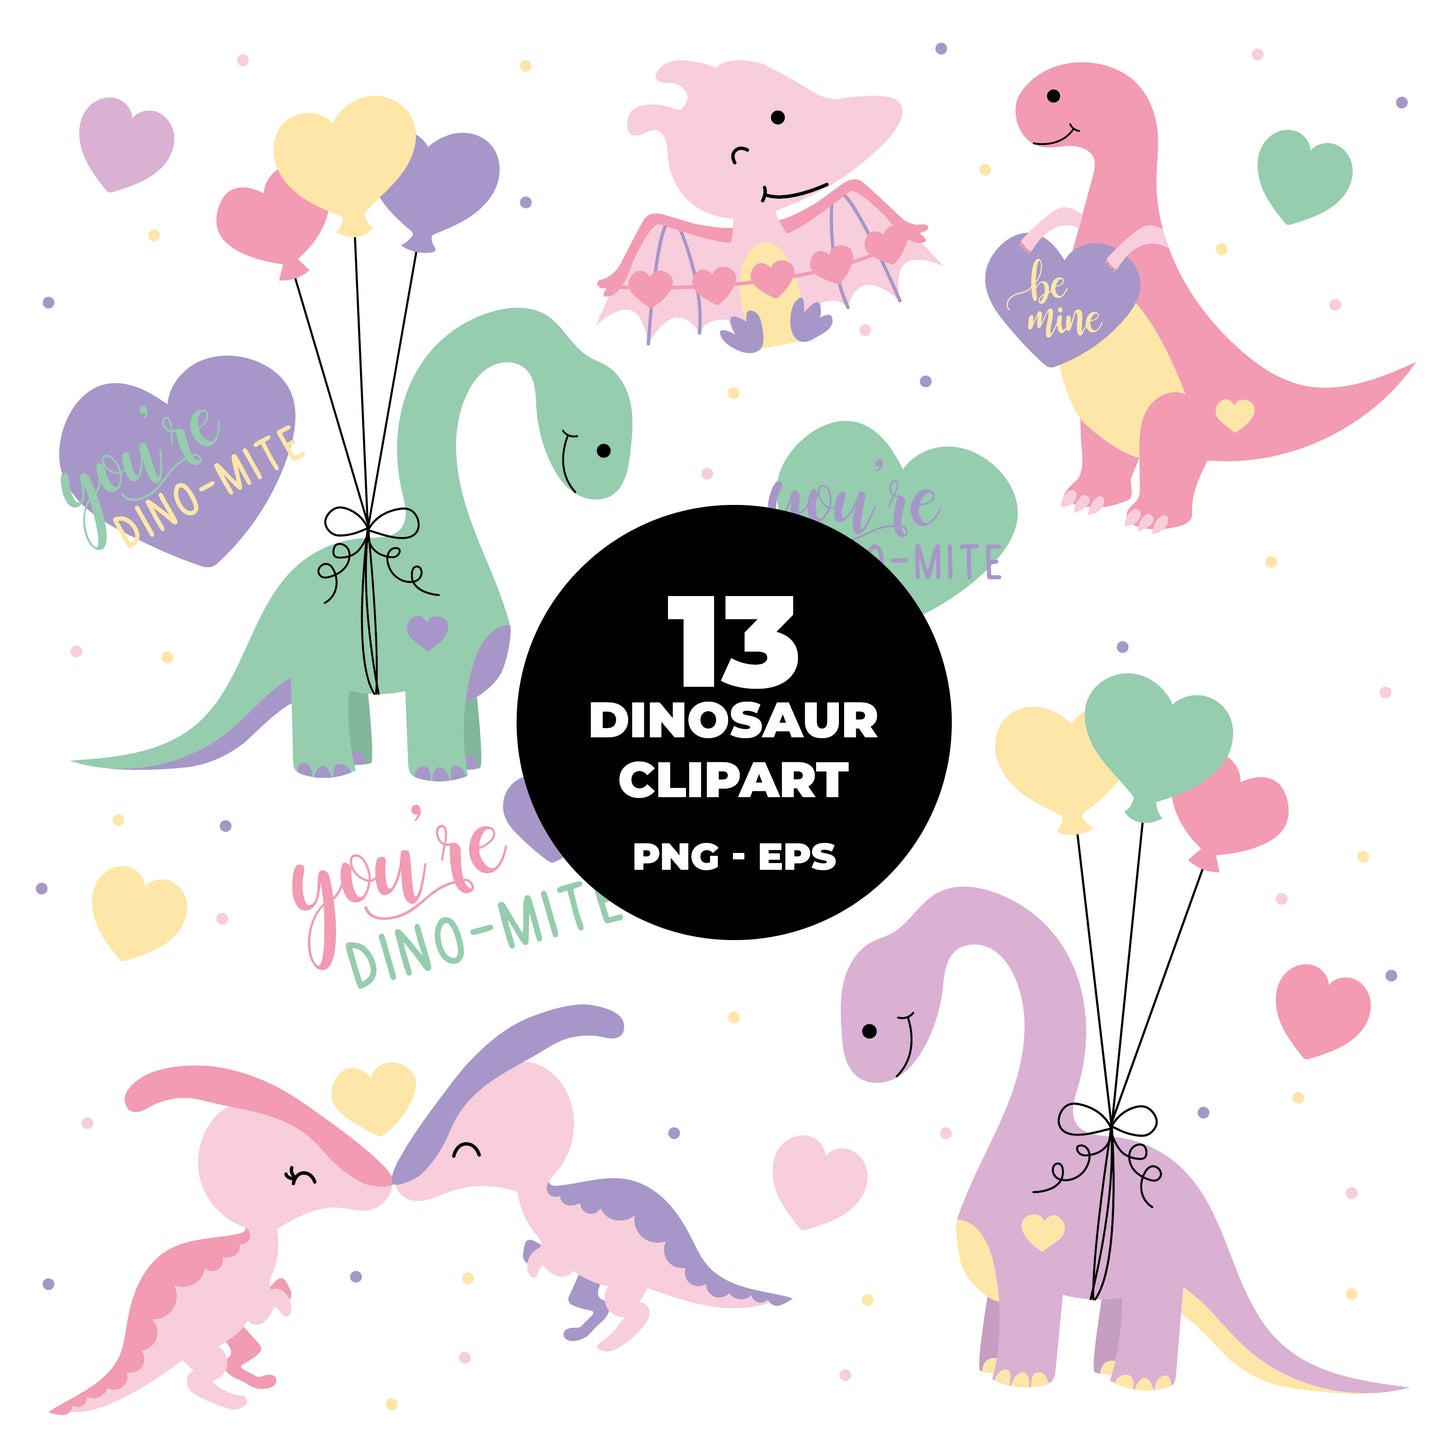 COD791 - Dinosaur clipart, kids dinosaur clipart, t-rex clipart, dino clipart, triceratops clipart files